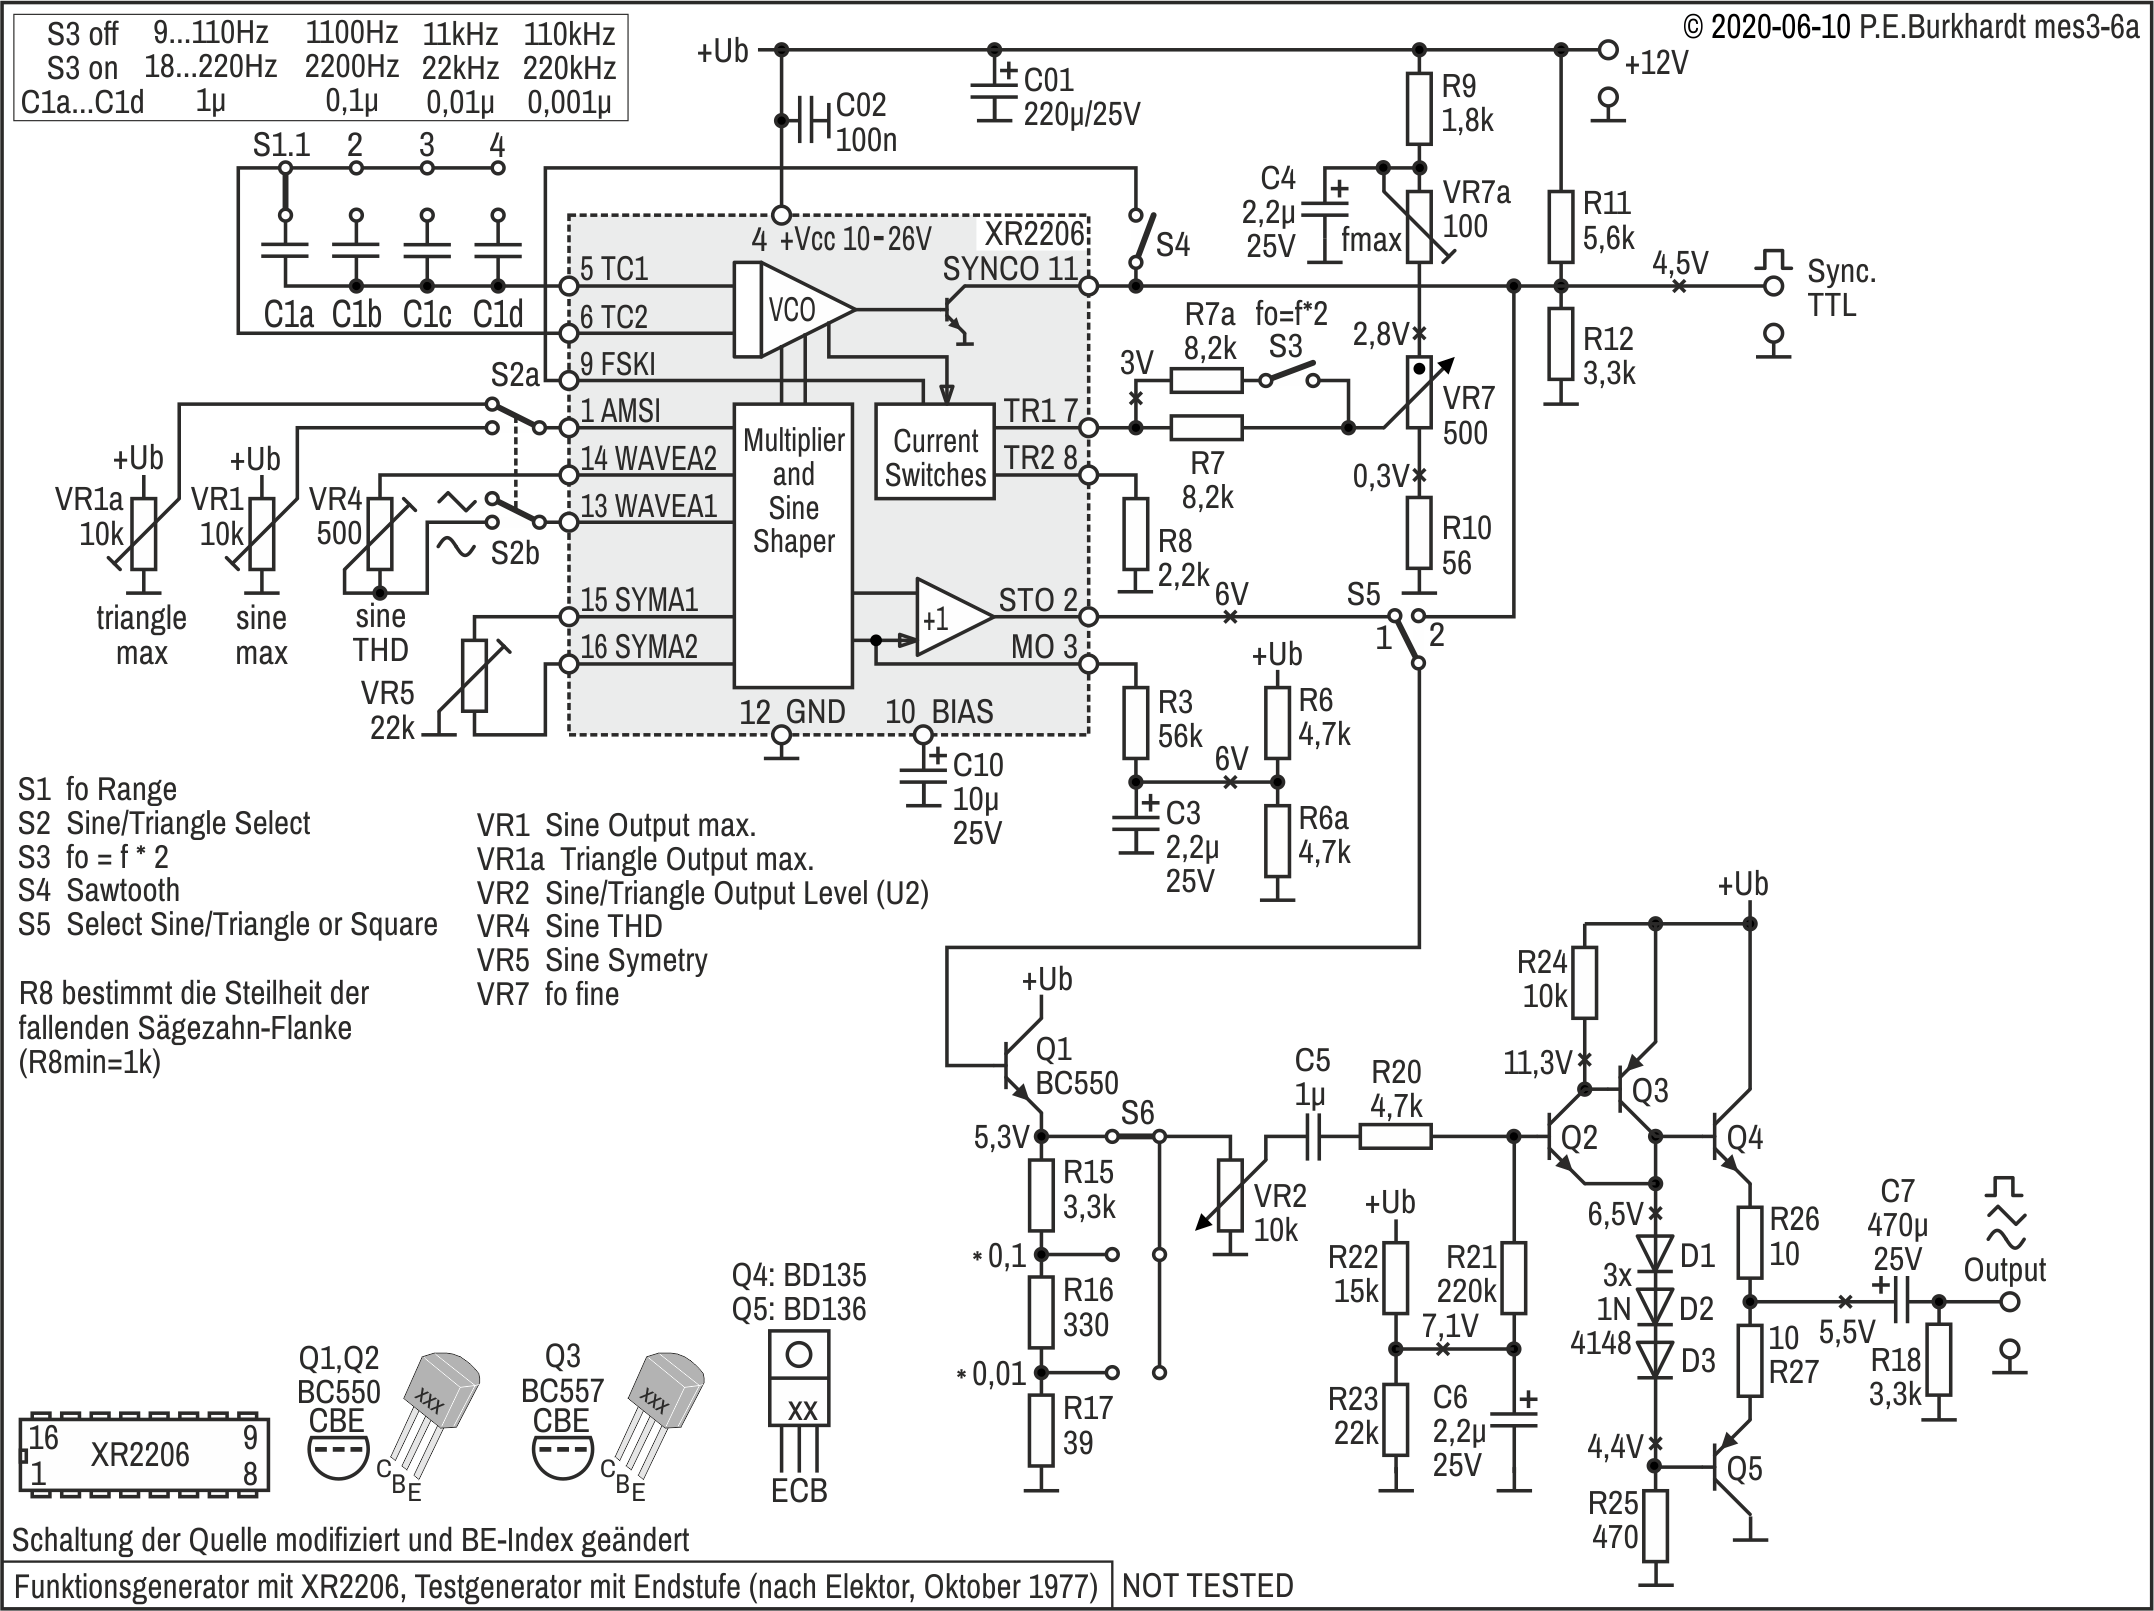 Funktionsgenerator XR2206 nach Elektor 1977, mit Leistungsendstufe